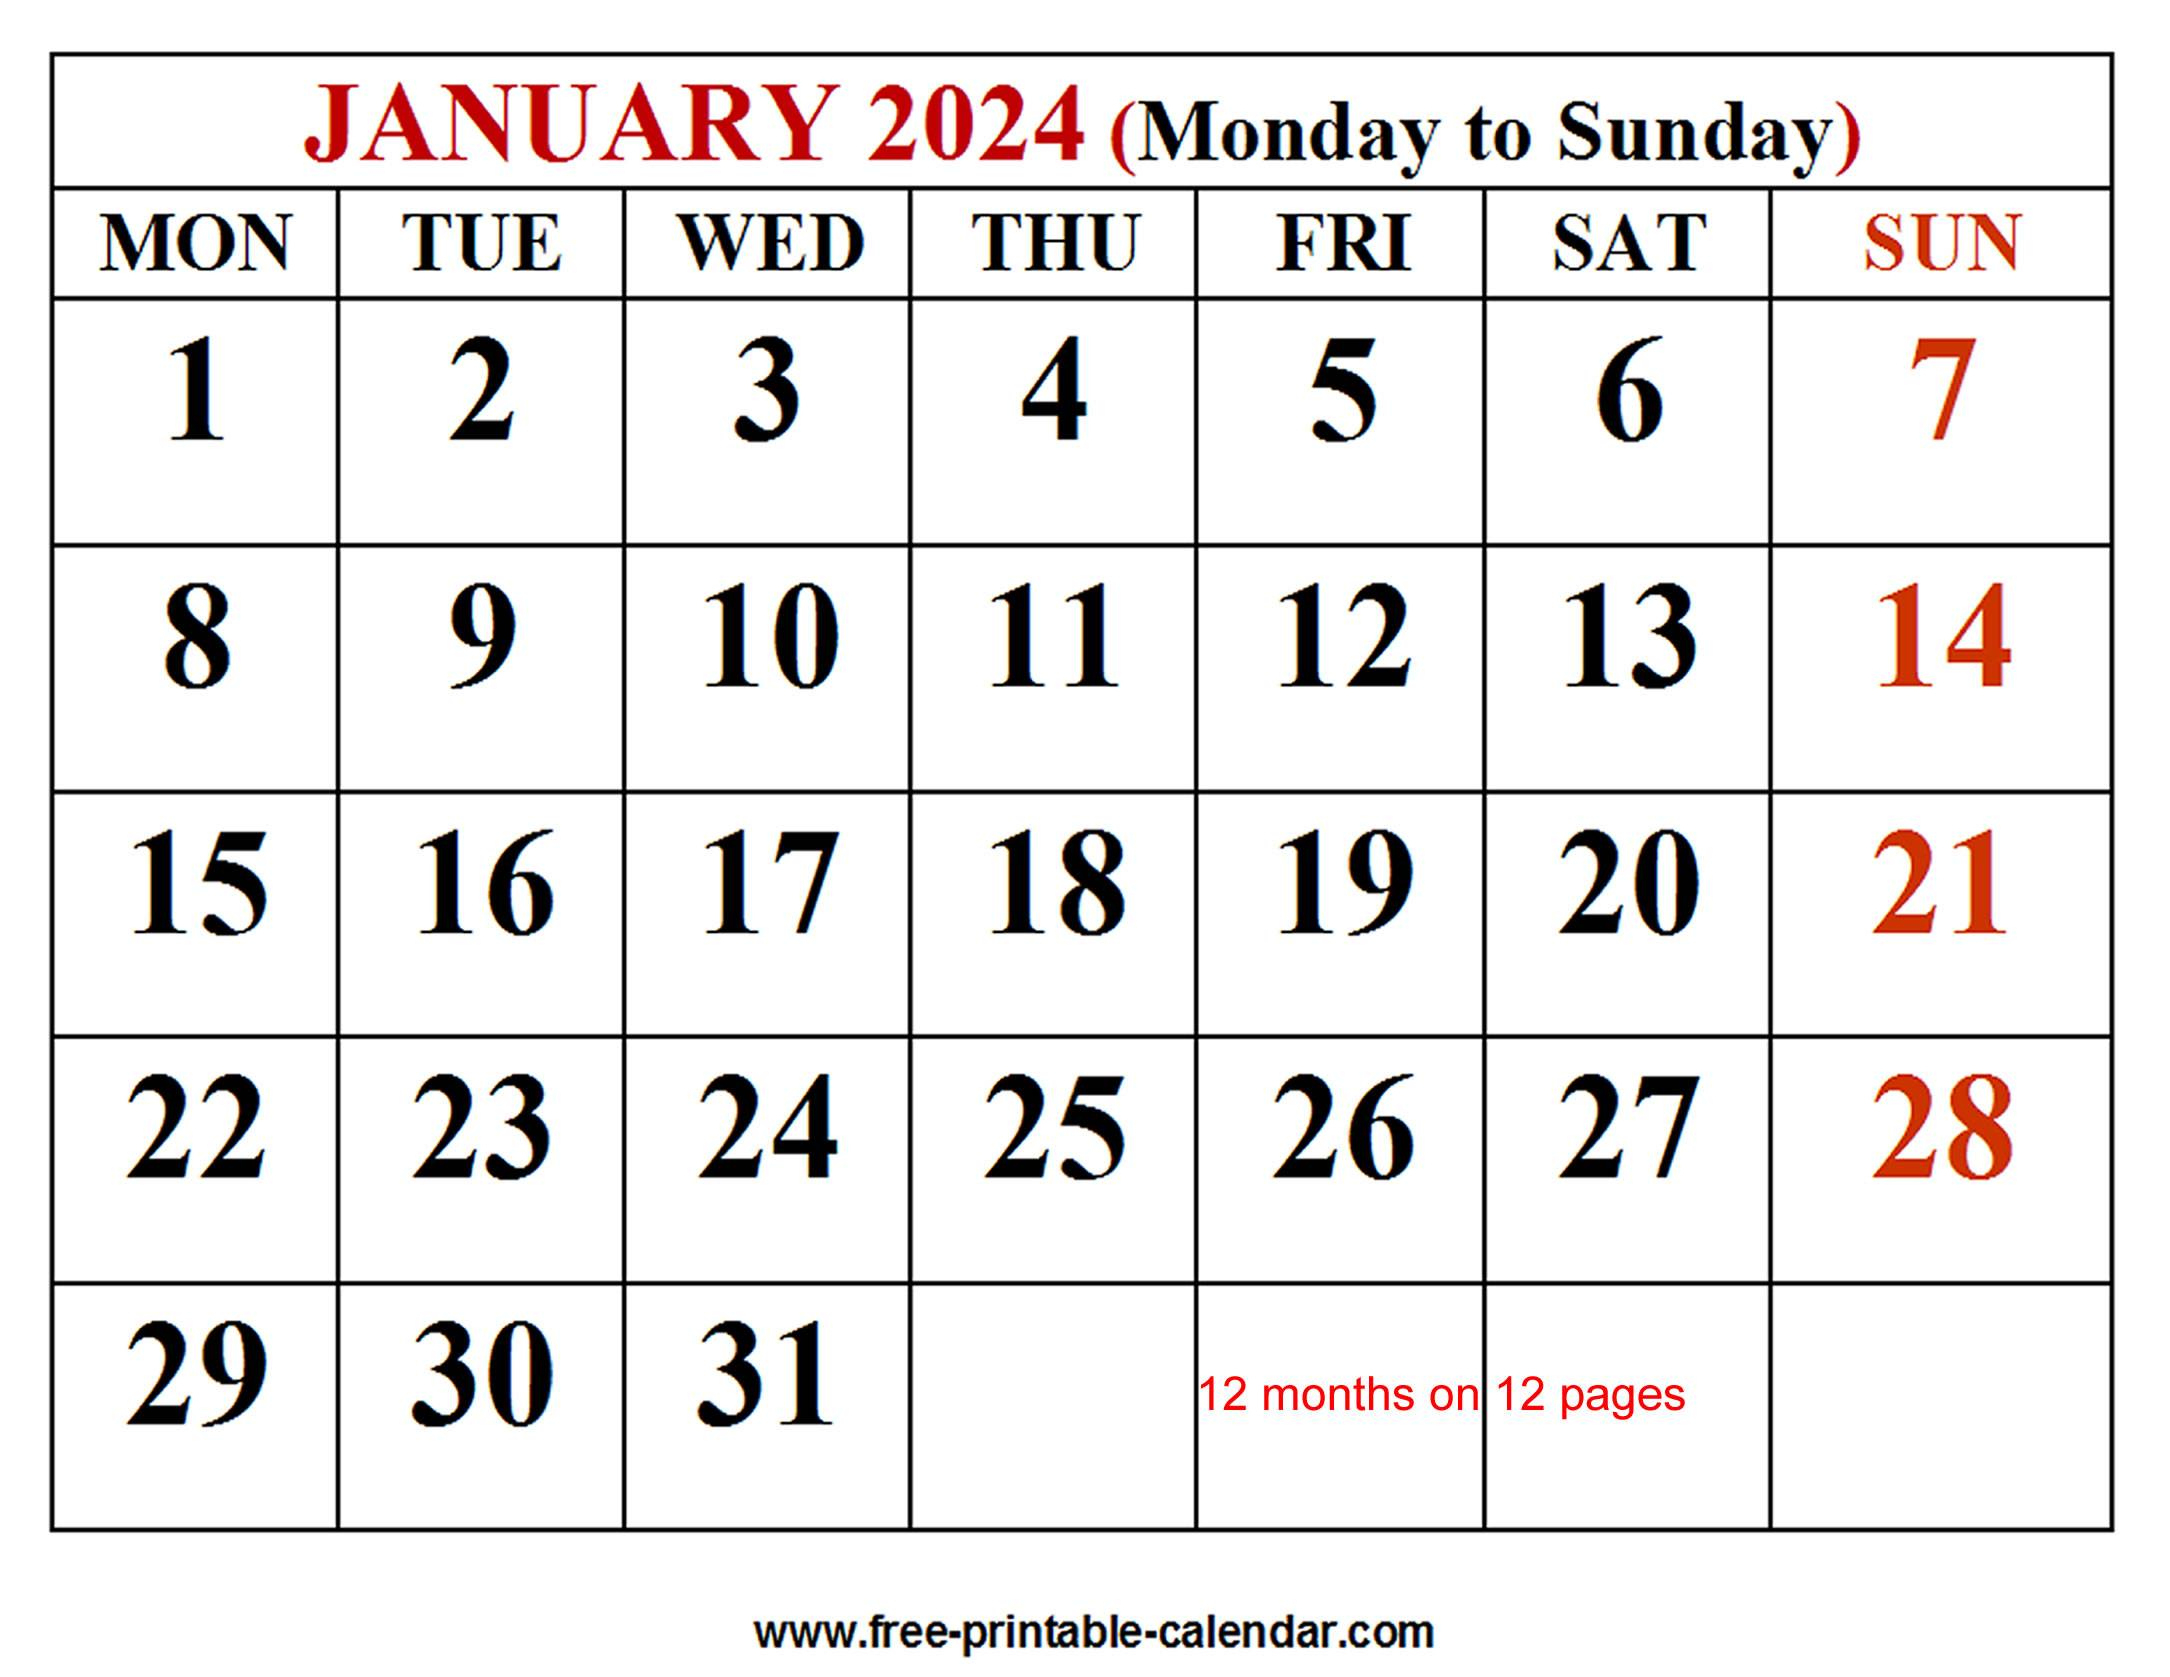 2024 Calendar Template - Free-Printable-Calendar | Free Printable Calendar 2024 2 Months Per Page